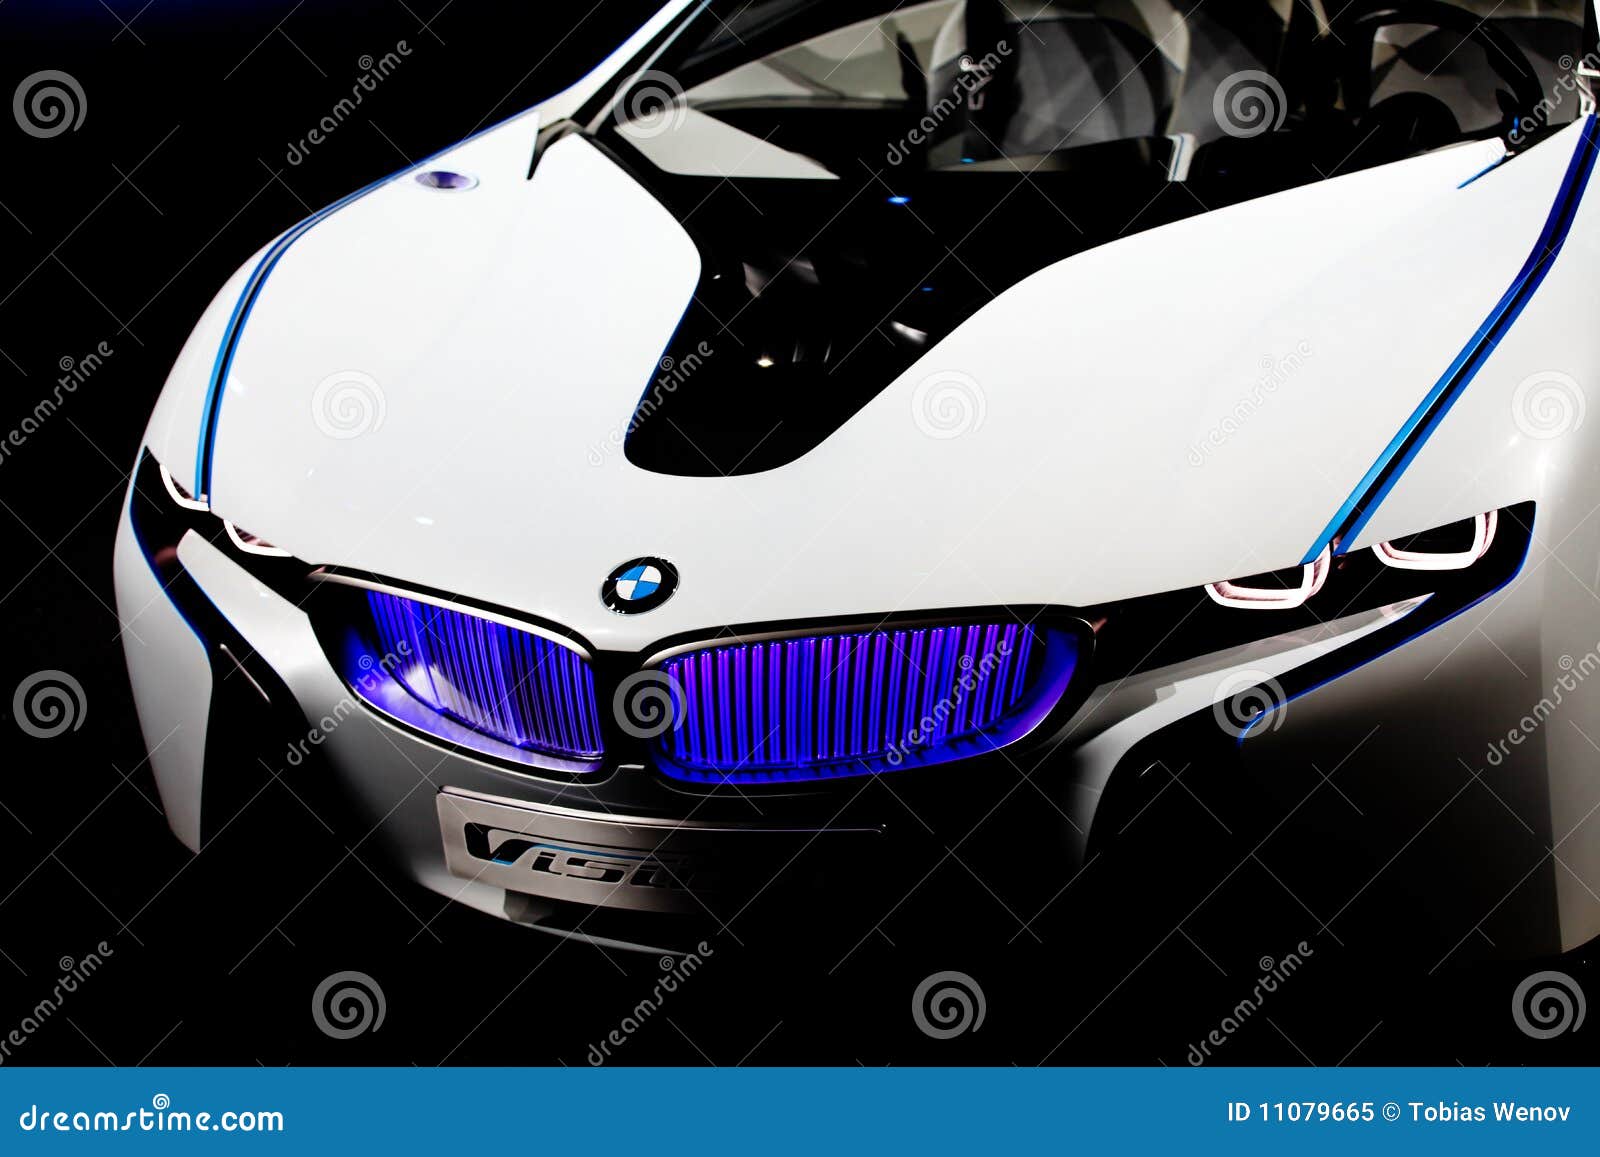 Wallpaper BMW concept car, design 2880x1800 HD Picture, Image